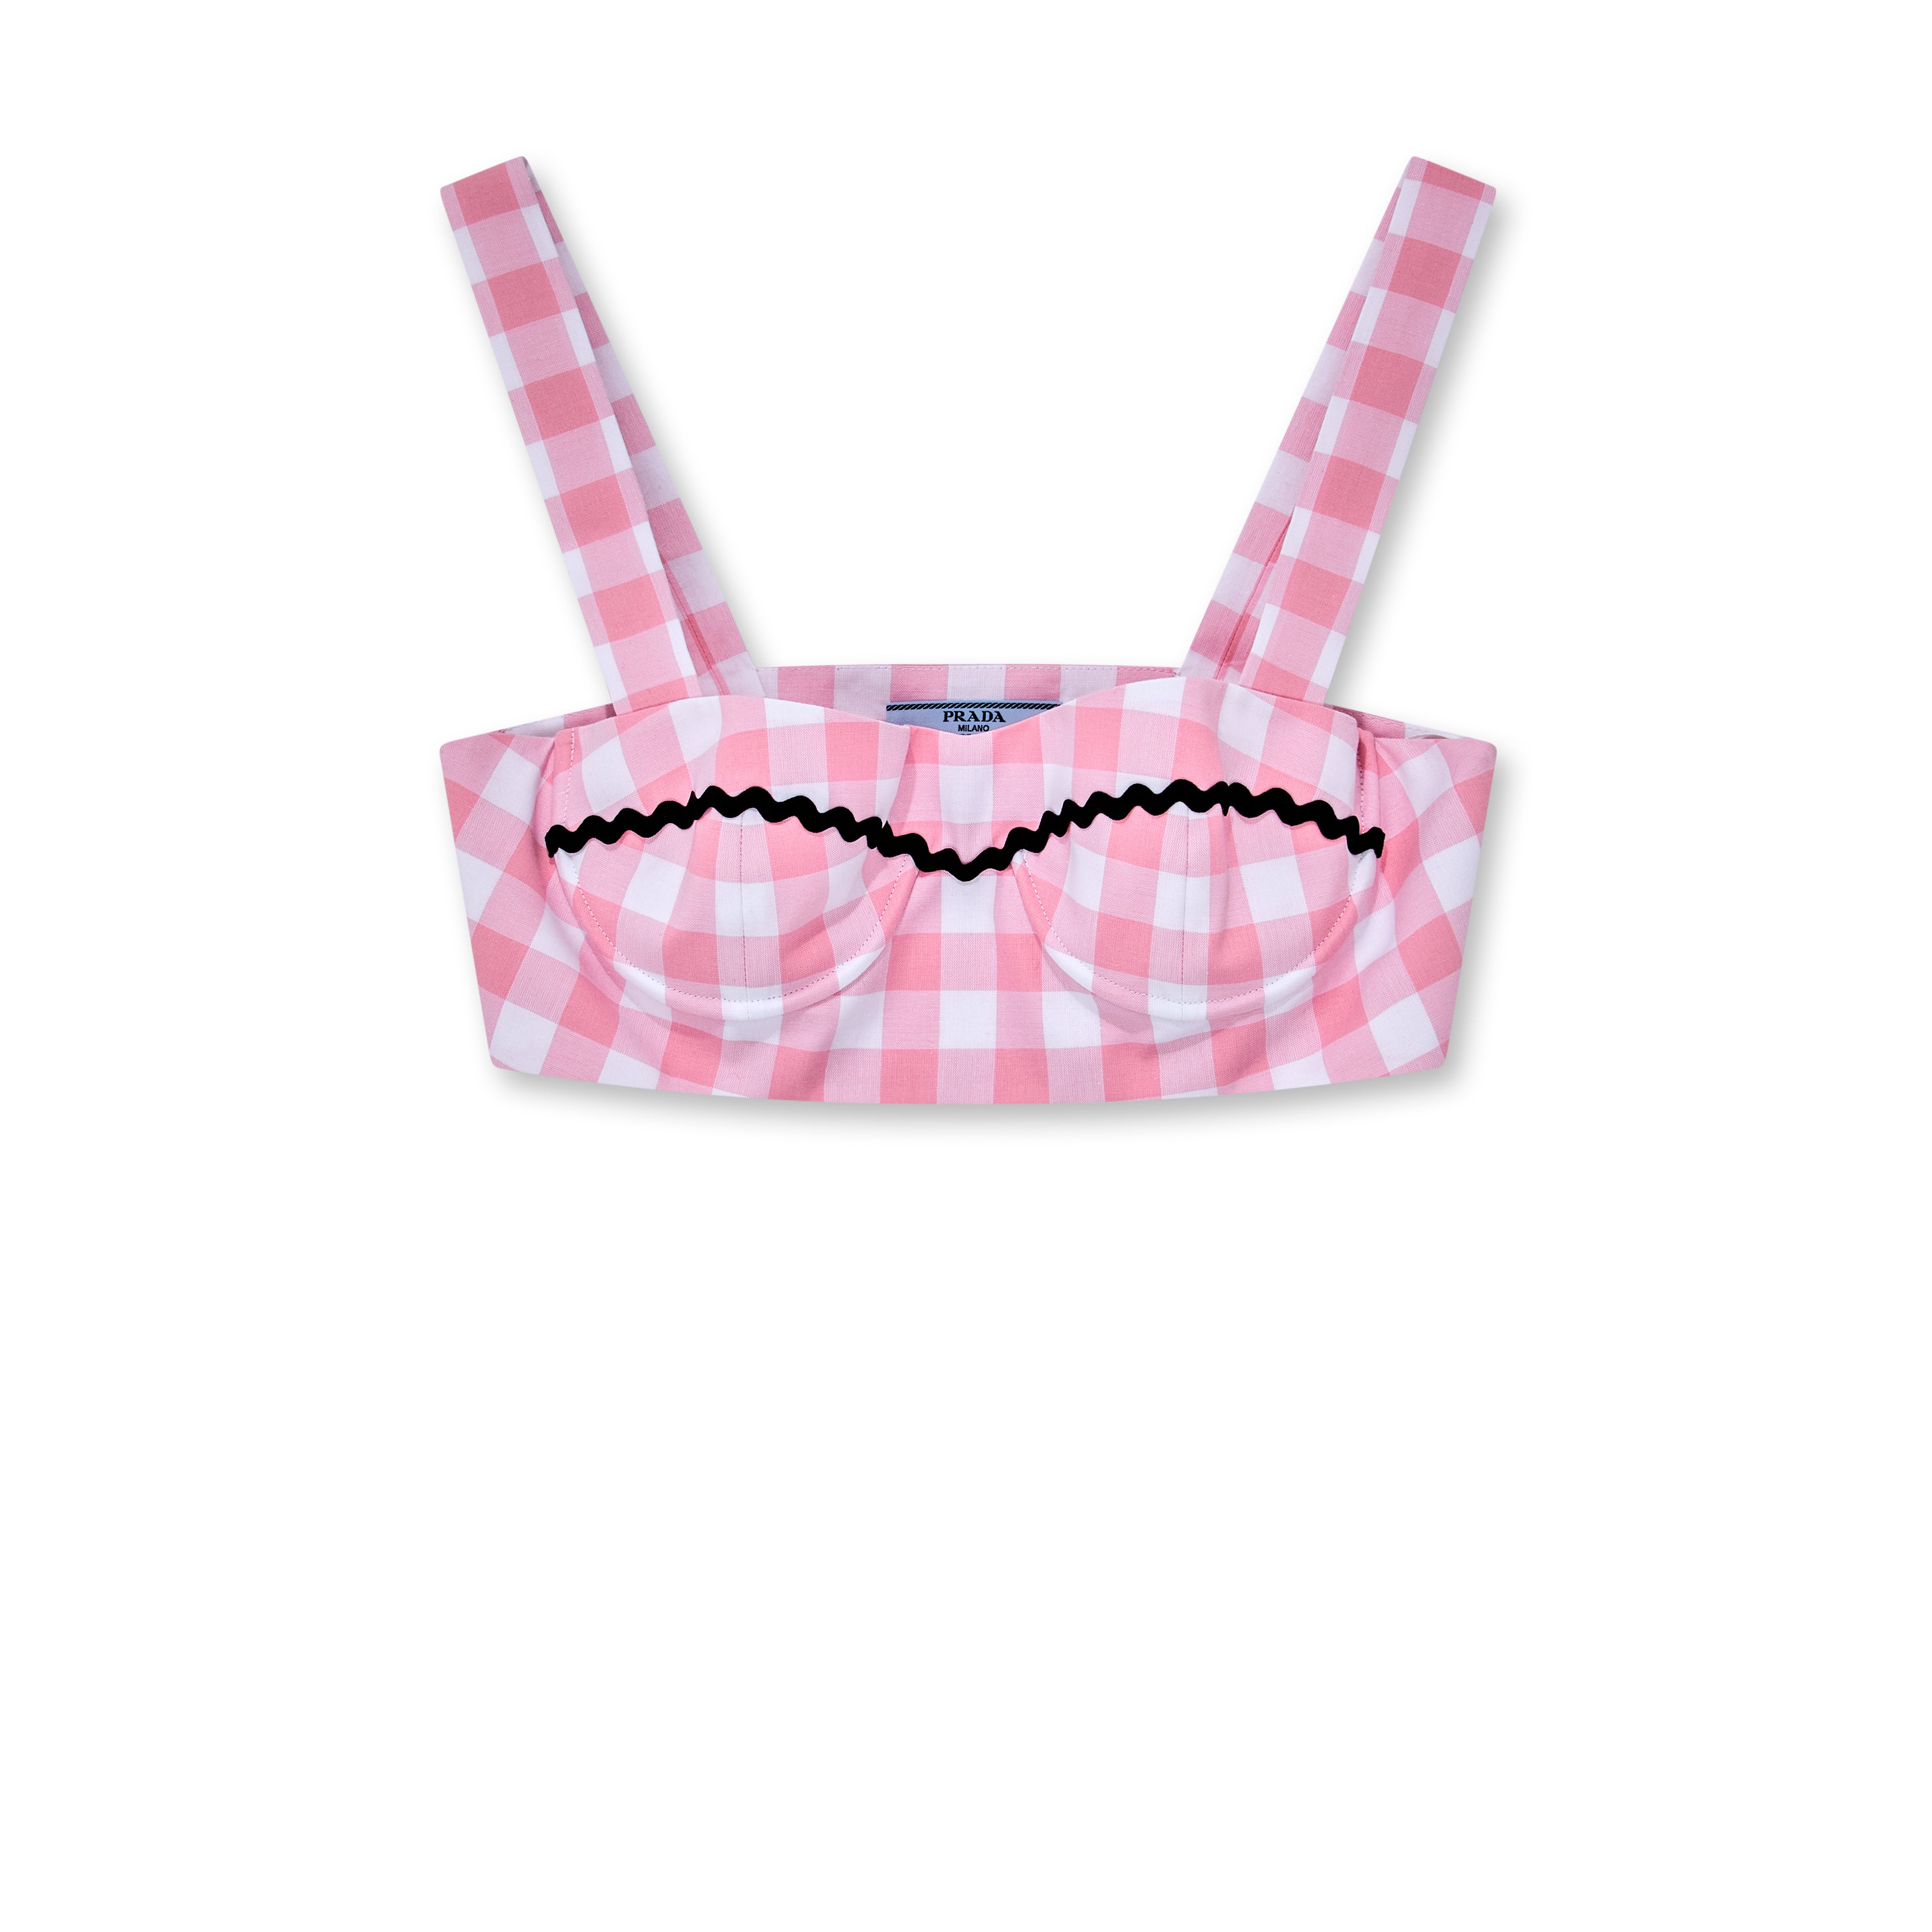 Prada - Women's Gingham Check Bralette Top - (Pink/Black)